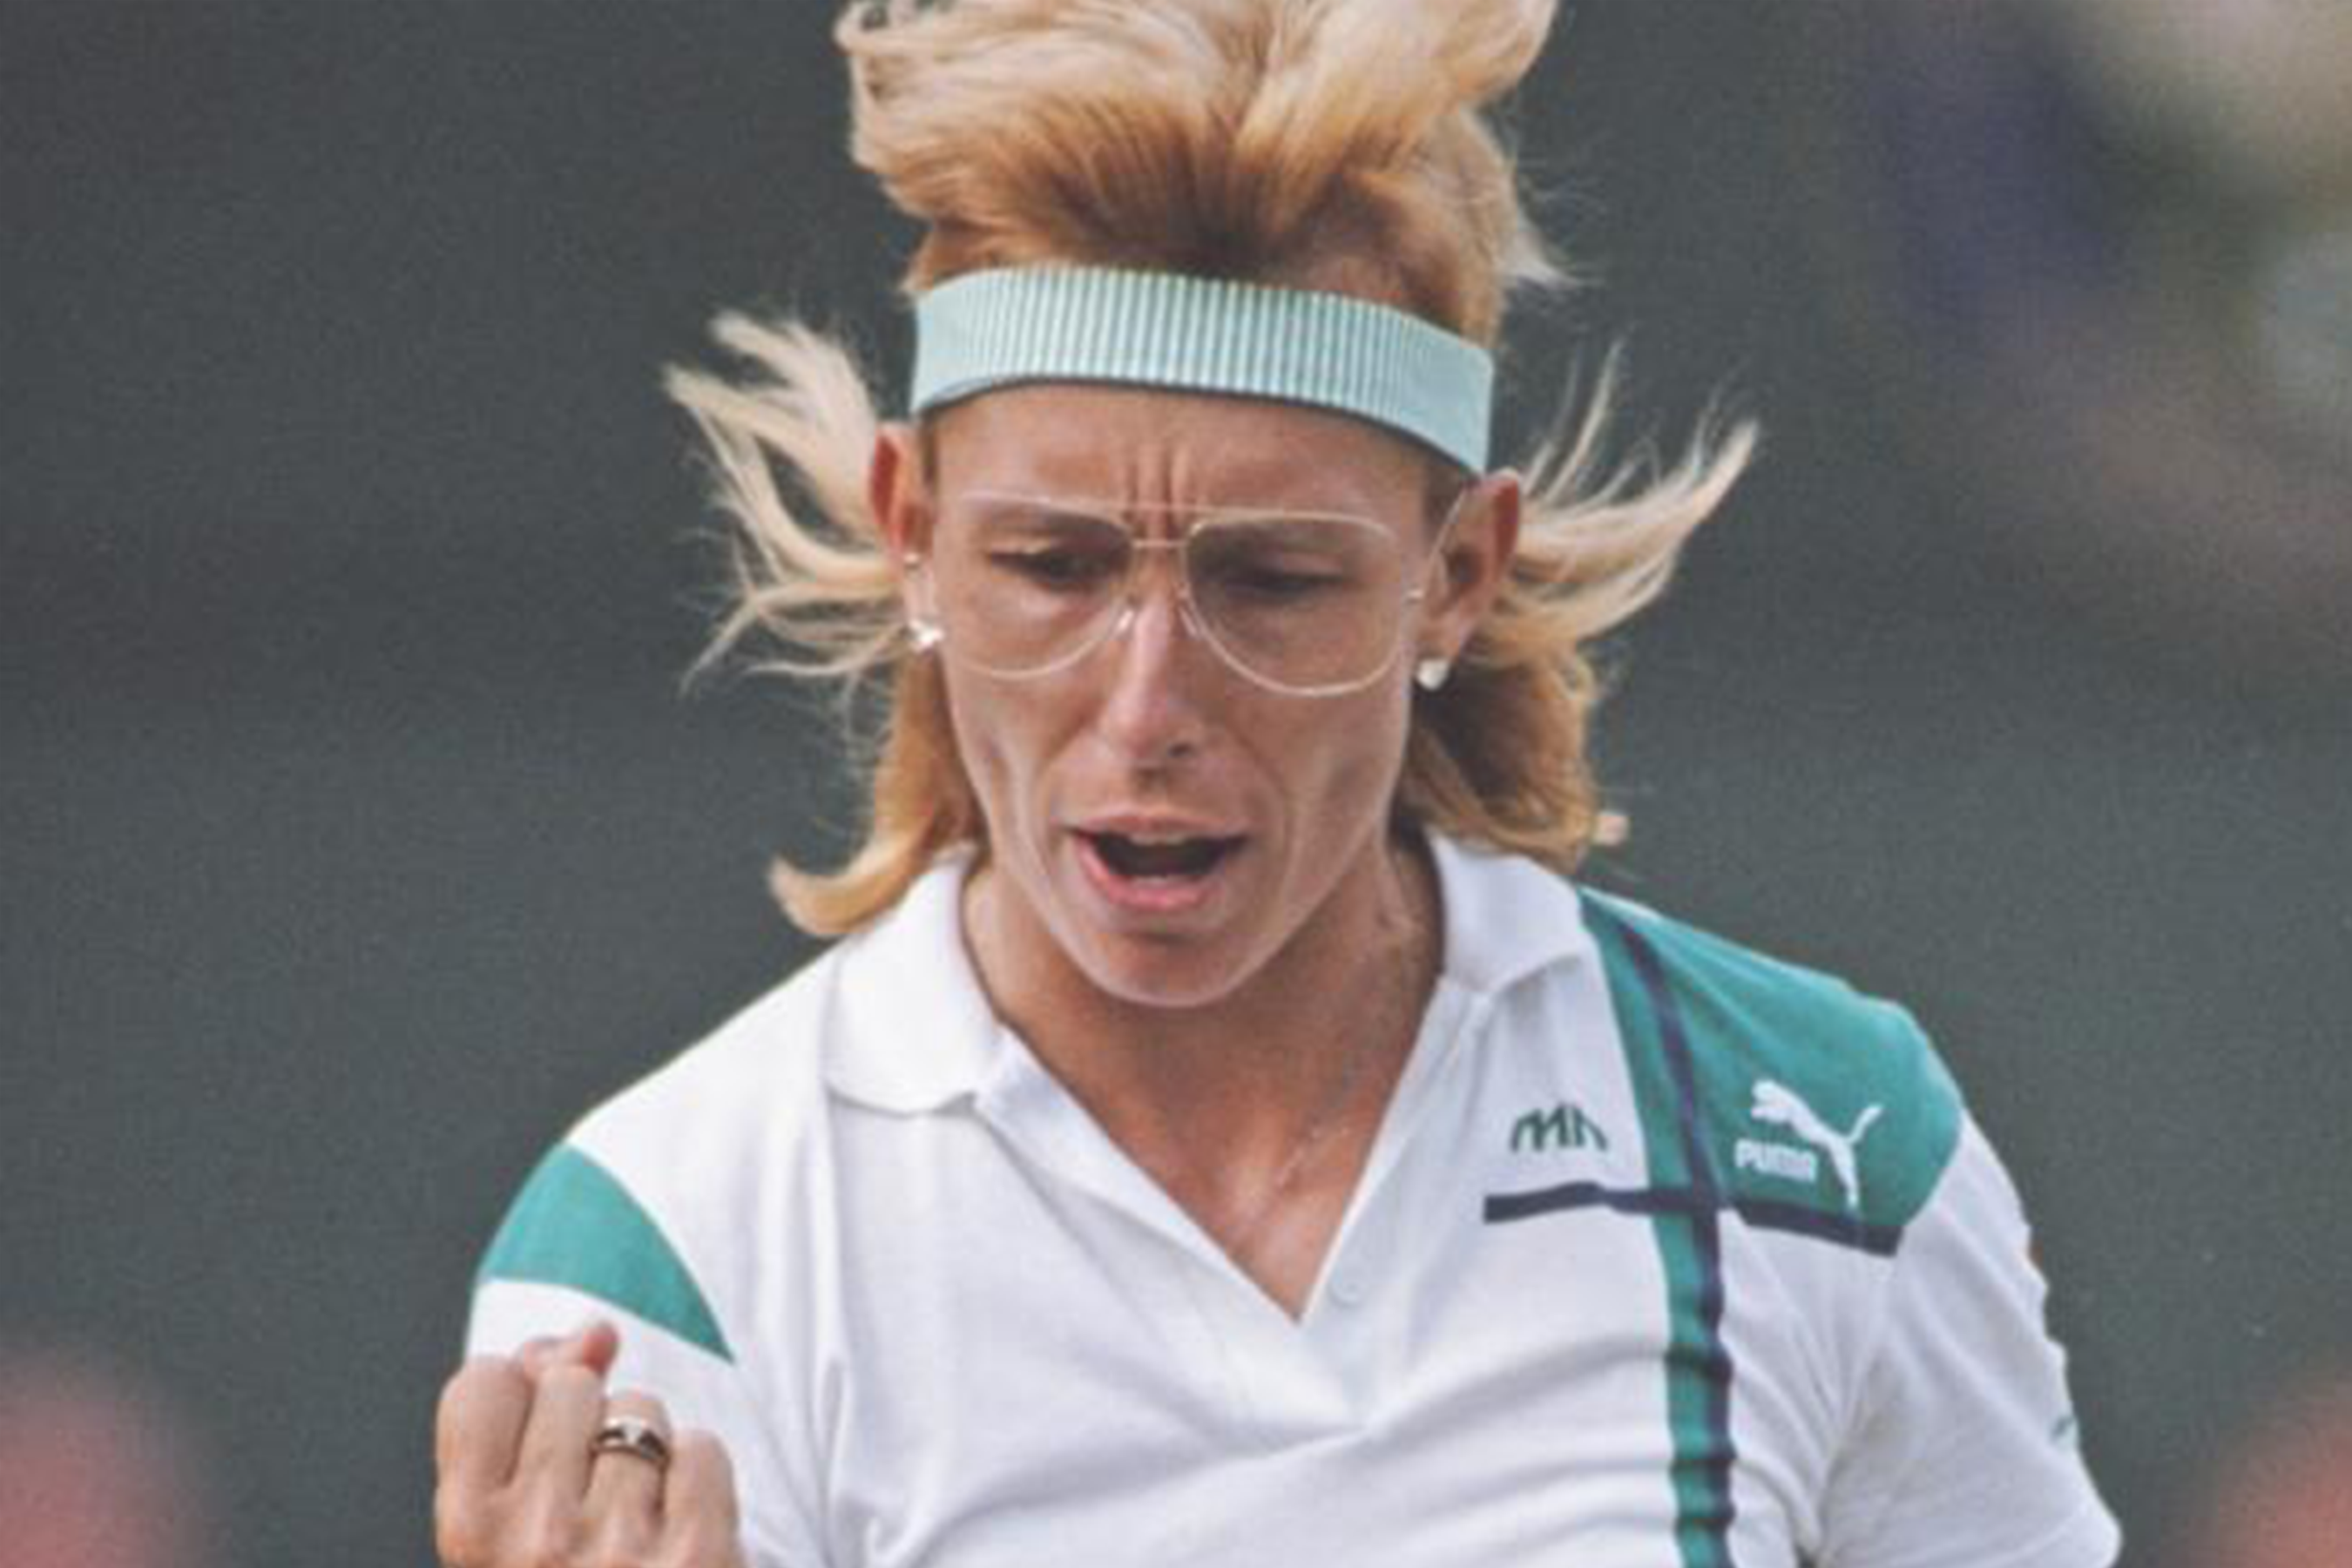 Martina Navratilova during a tennis match wearing her signature round frames